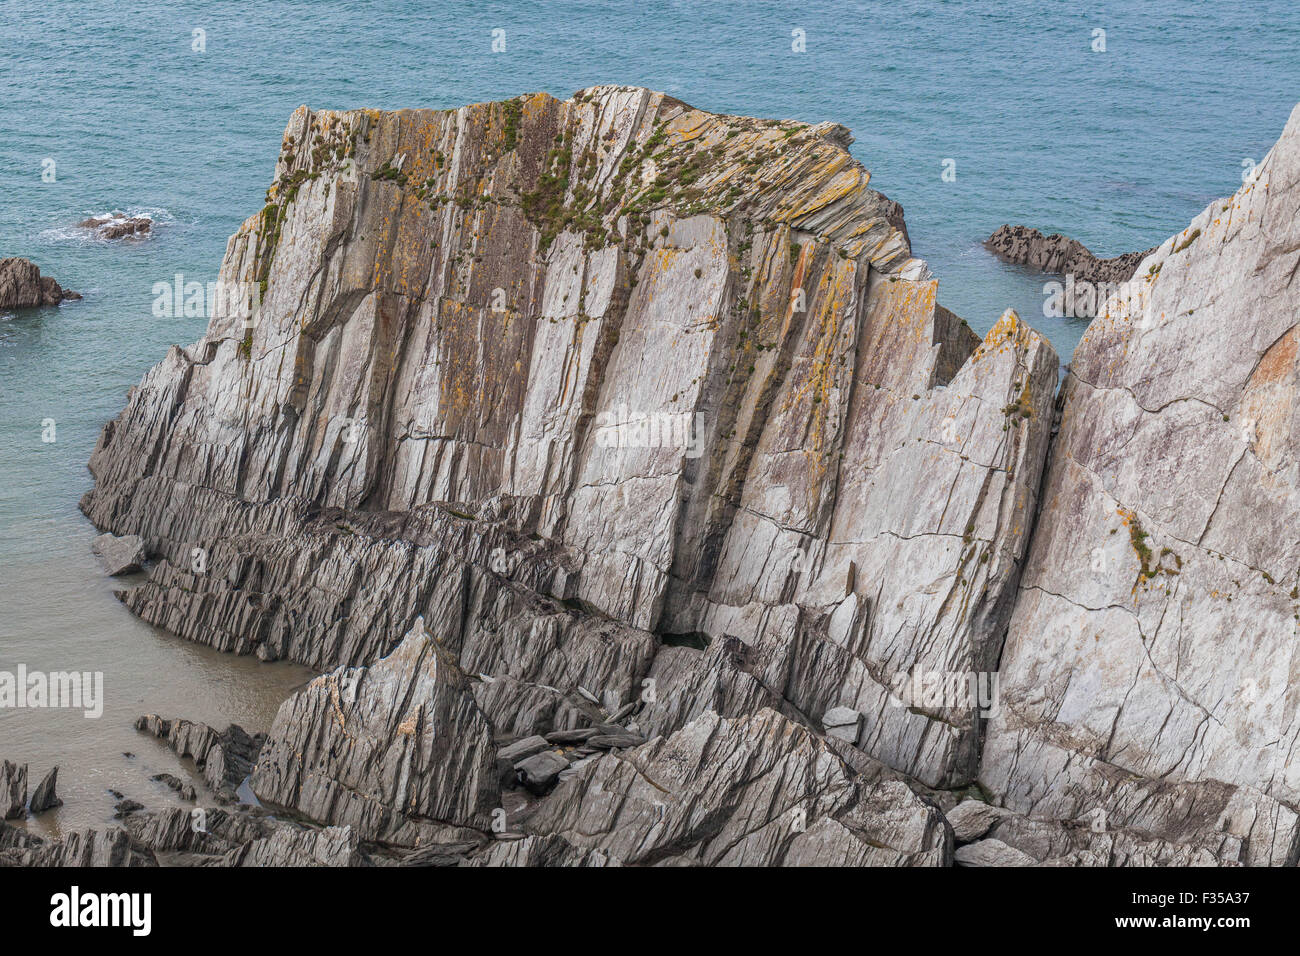 Jagged rocks in severe coastal erosion, Bull Point, Devon, West Country, England, UK Stock Photo